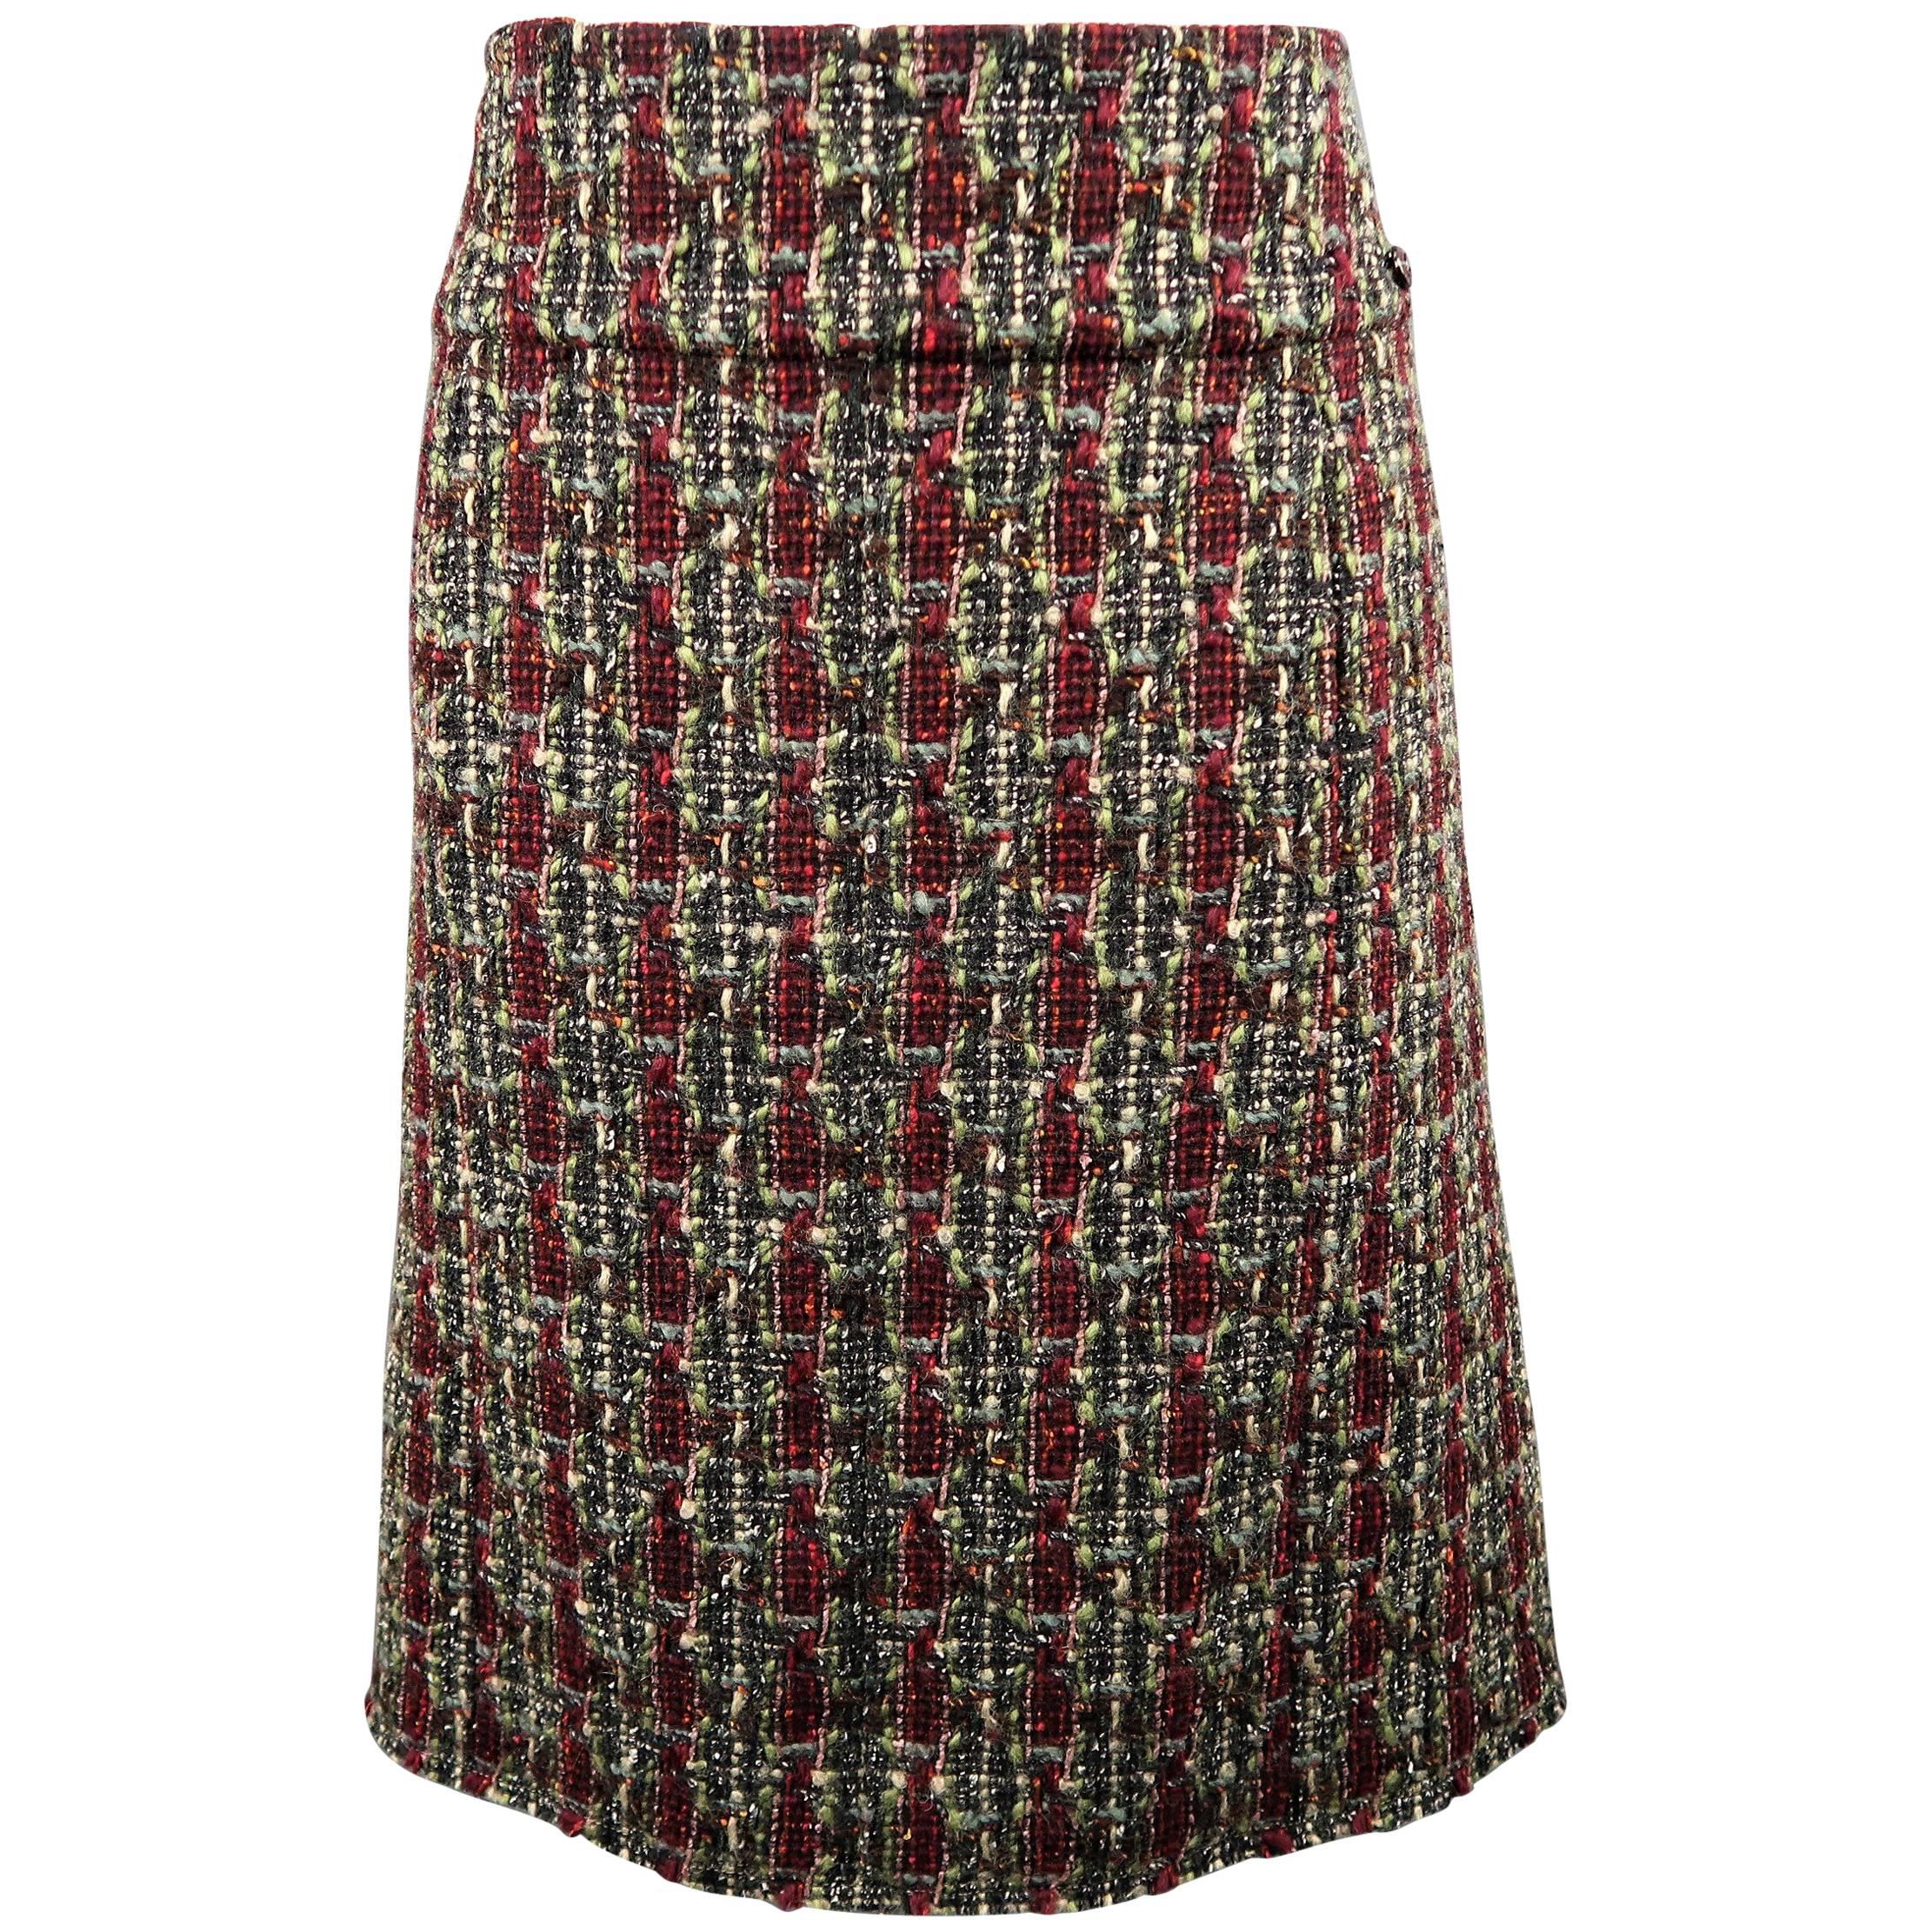 CHANEL Skirt - Size 14 - Burgundy & Green Wool Blend Boucle Tweed A Line Skirt